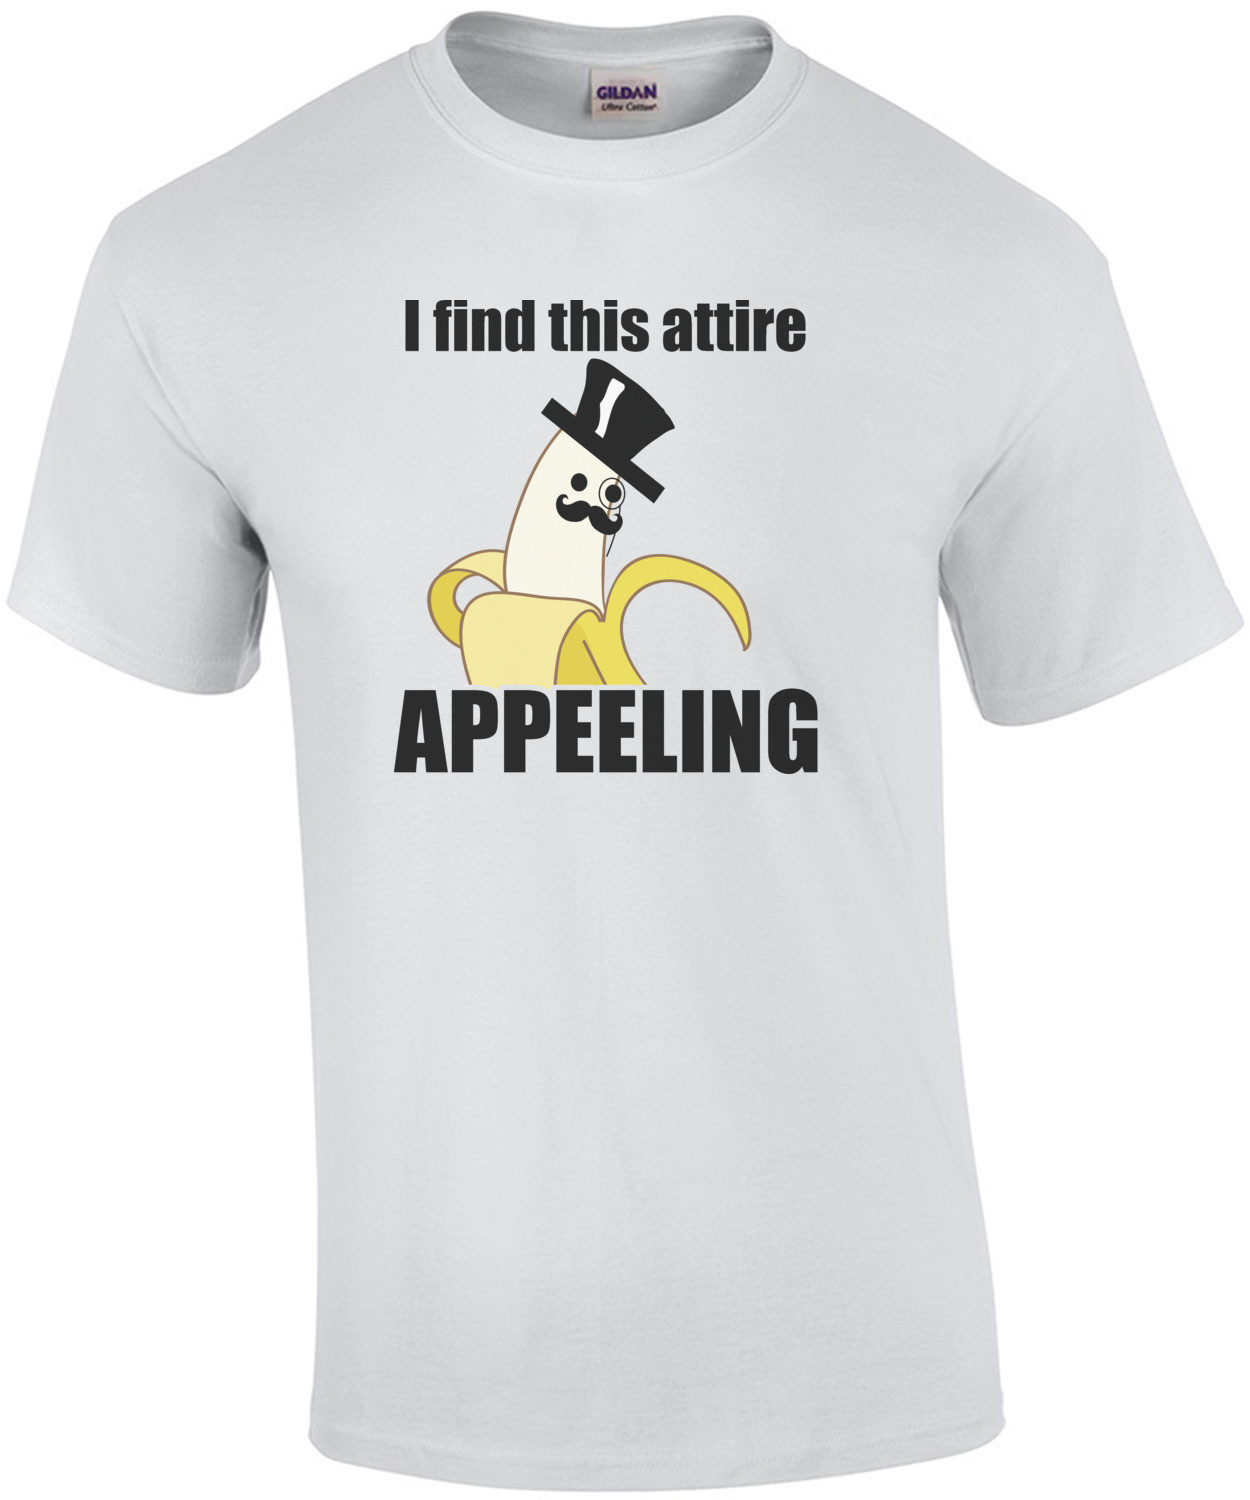 I find this attire appeeling - Pun